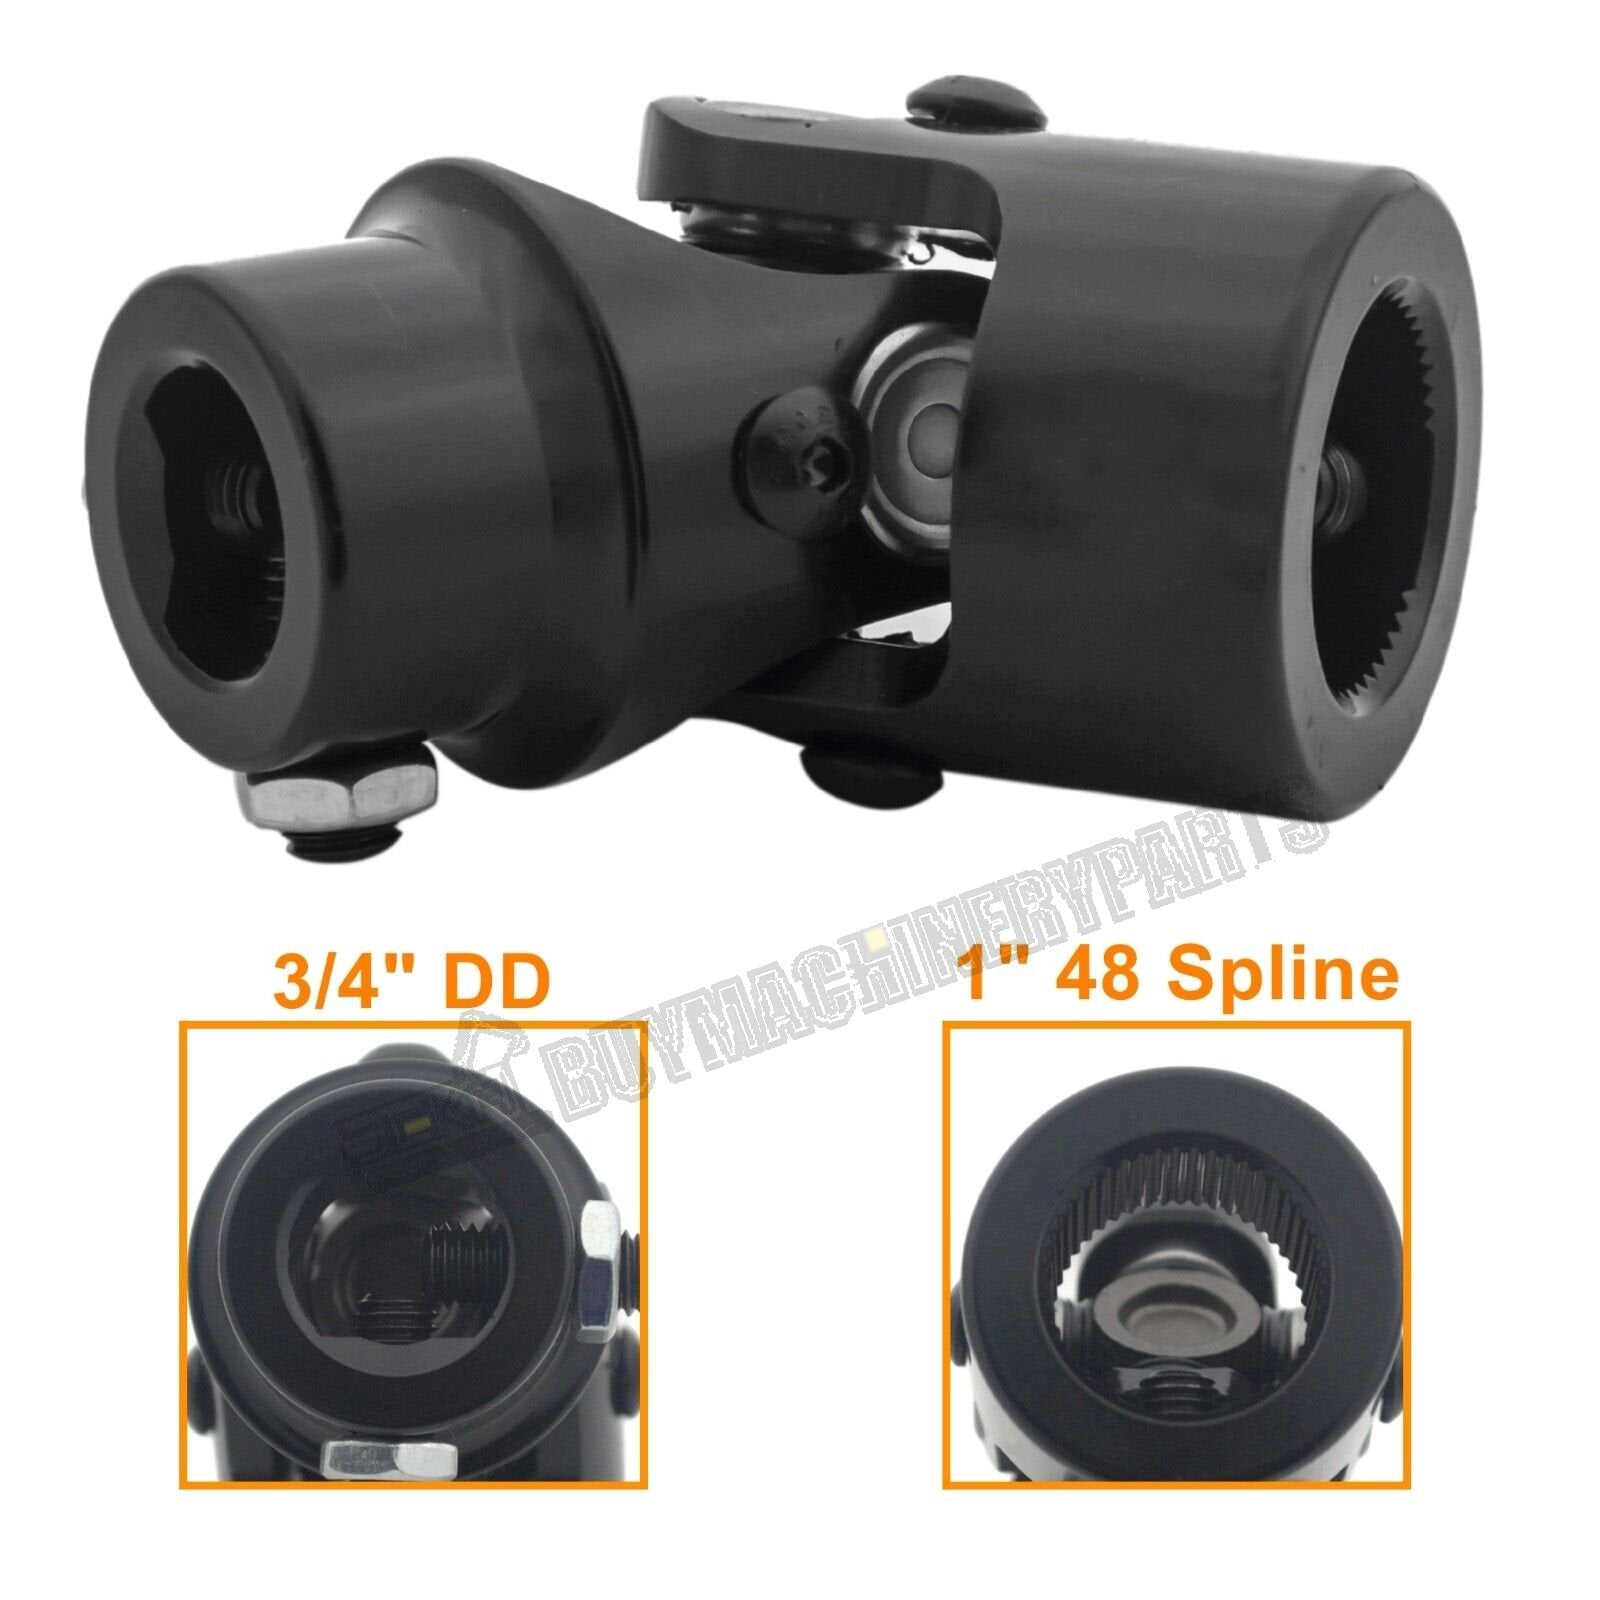 1" 48 Spline X 3/4" DD Steering Shaft Steering Column U Joint Coupler Black NEW - Buymachineryparts